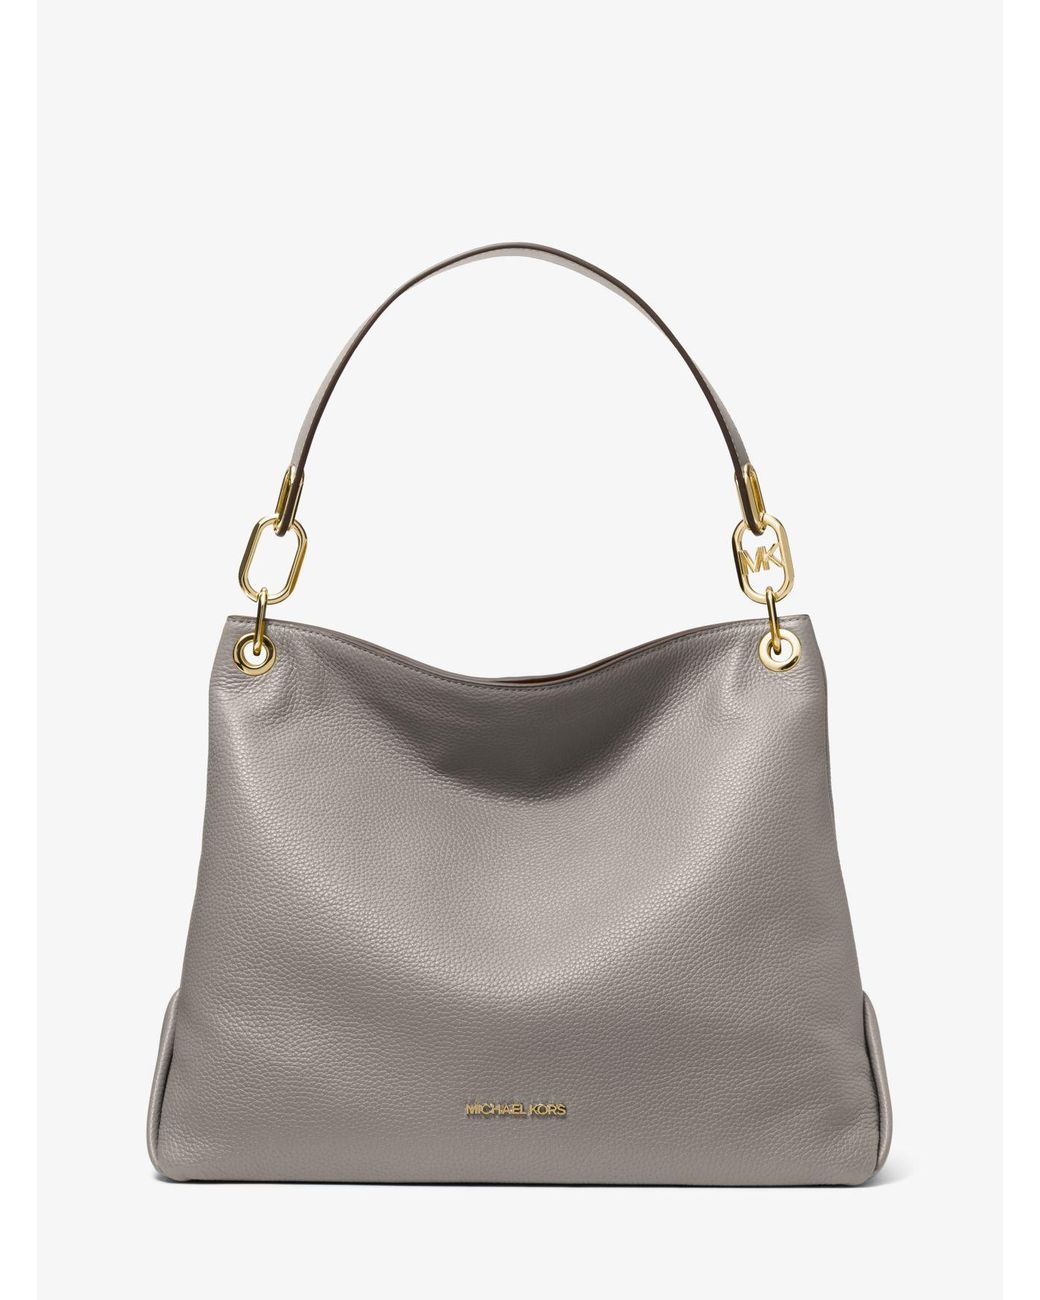 MICHAEL Michael Kors Trisha Large Pebbled Leather Shoulder Bag in Grey ...